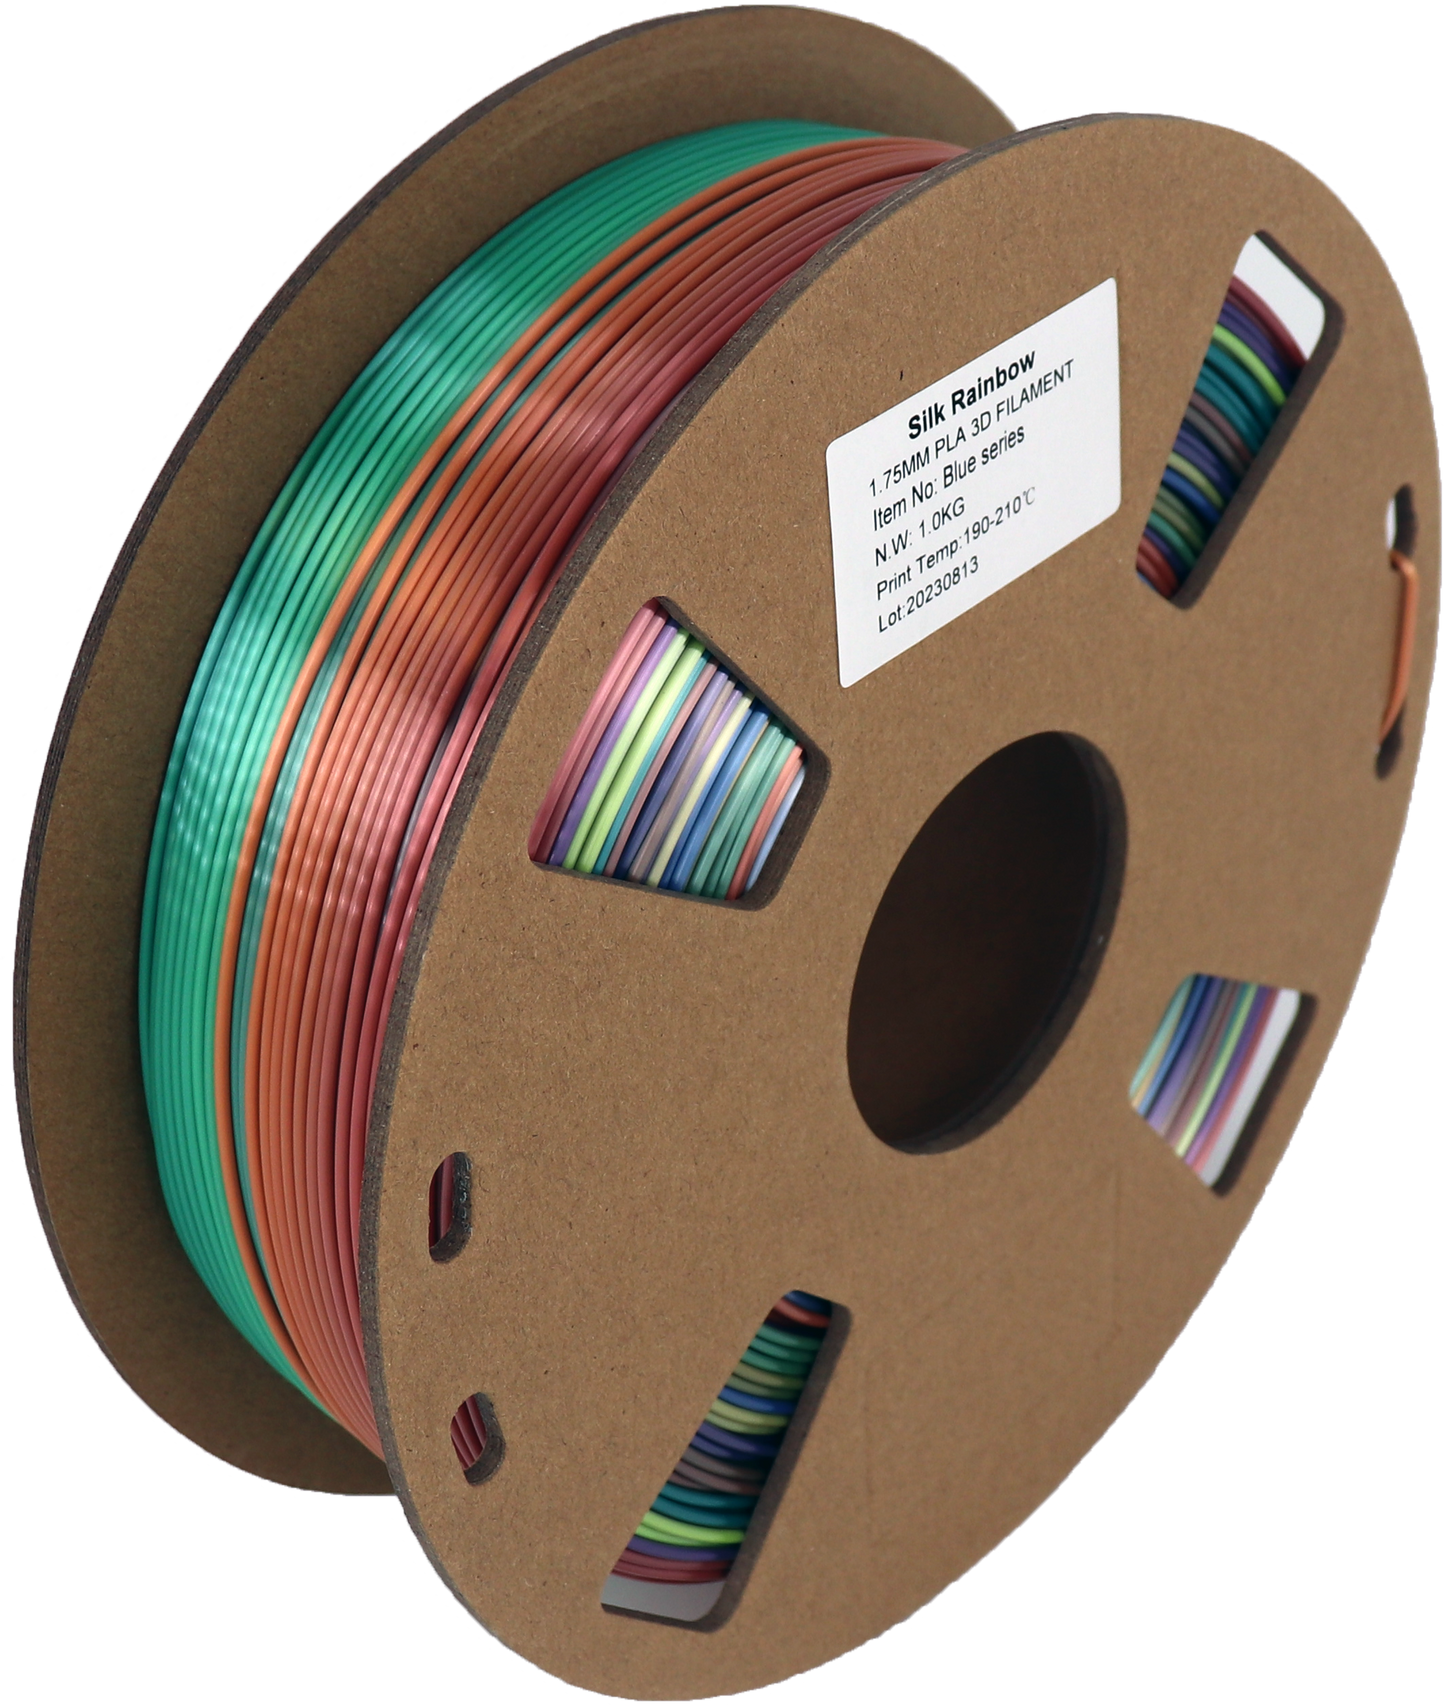 PS Imports PLA 1.75mm x Rainbow Silk Rainbow-B